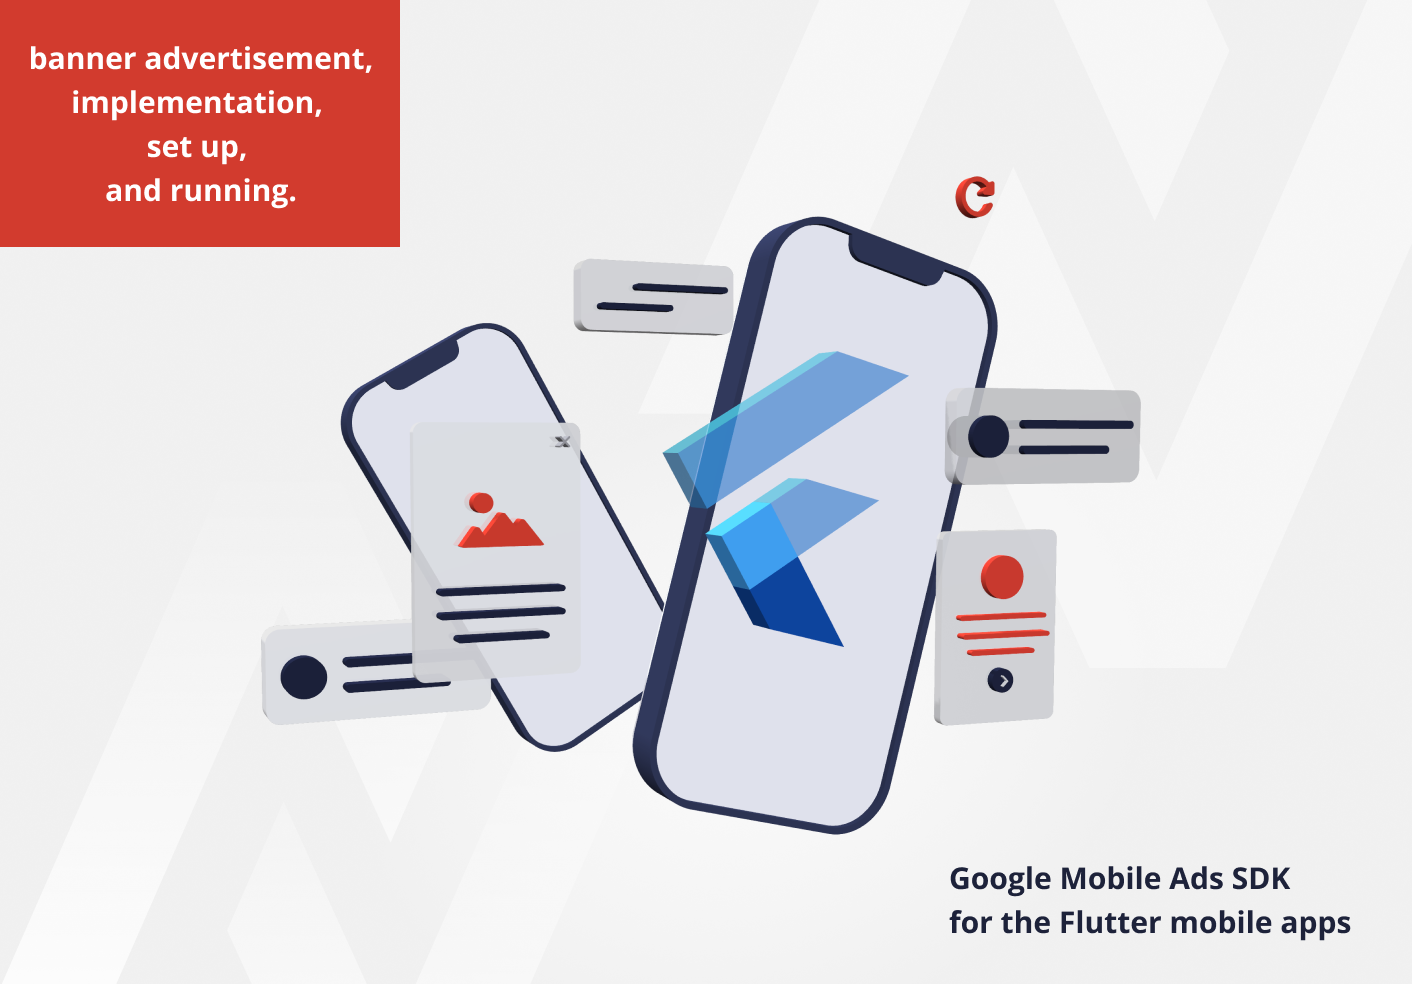 Google Mobile Ads SDK for the Flutter mobile apps: banner advertisement, implementation, set up, and running.